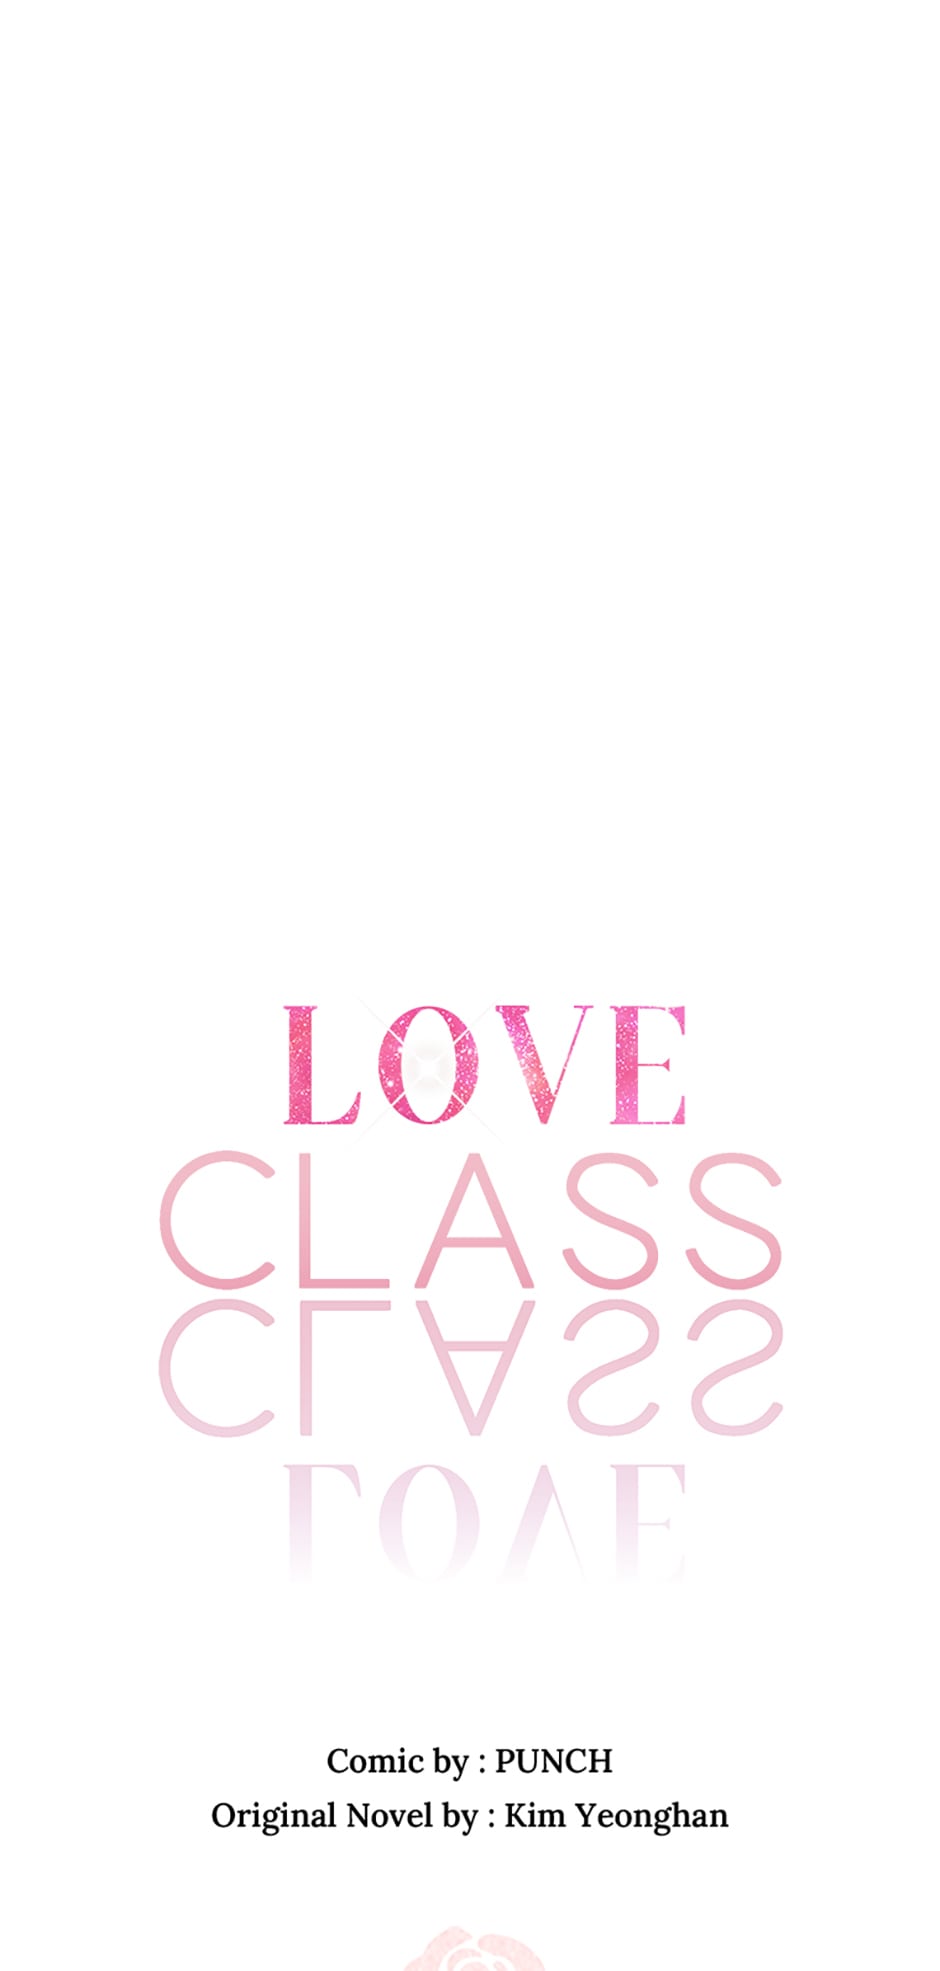 Love Class chapter 3